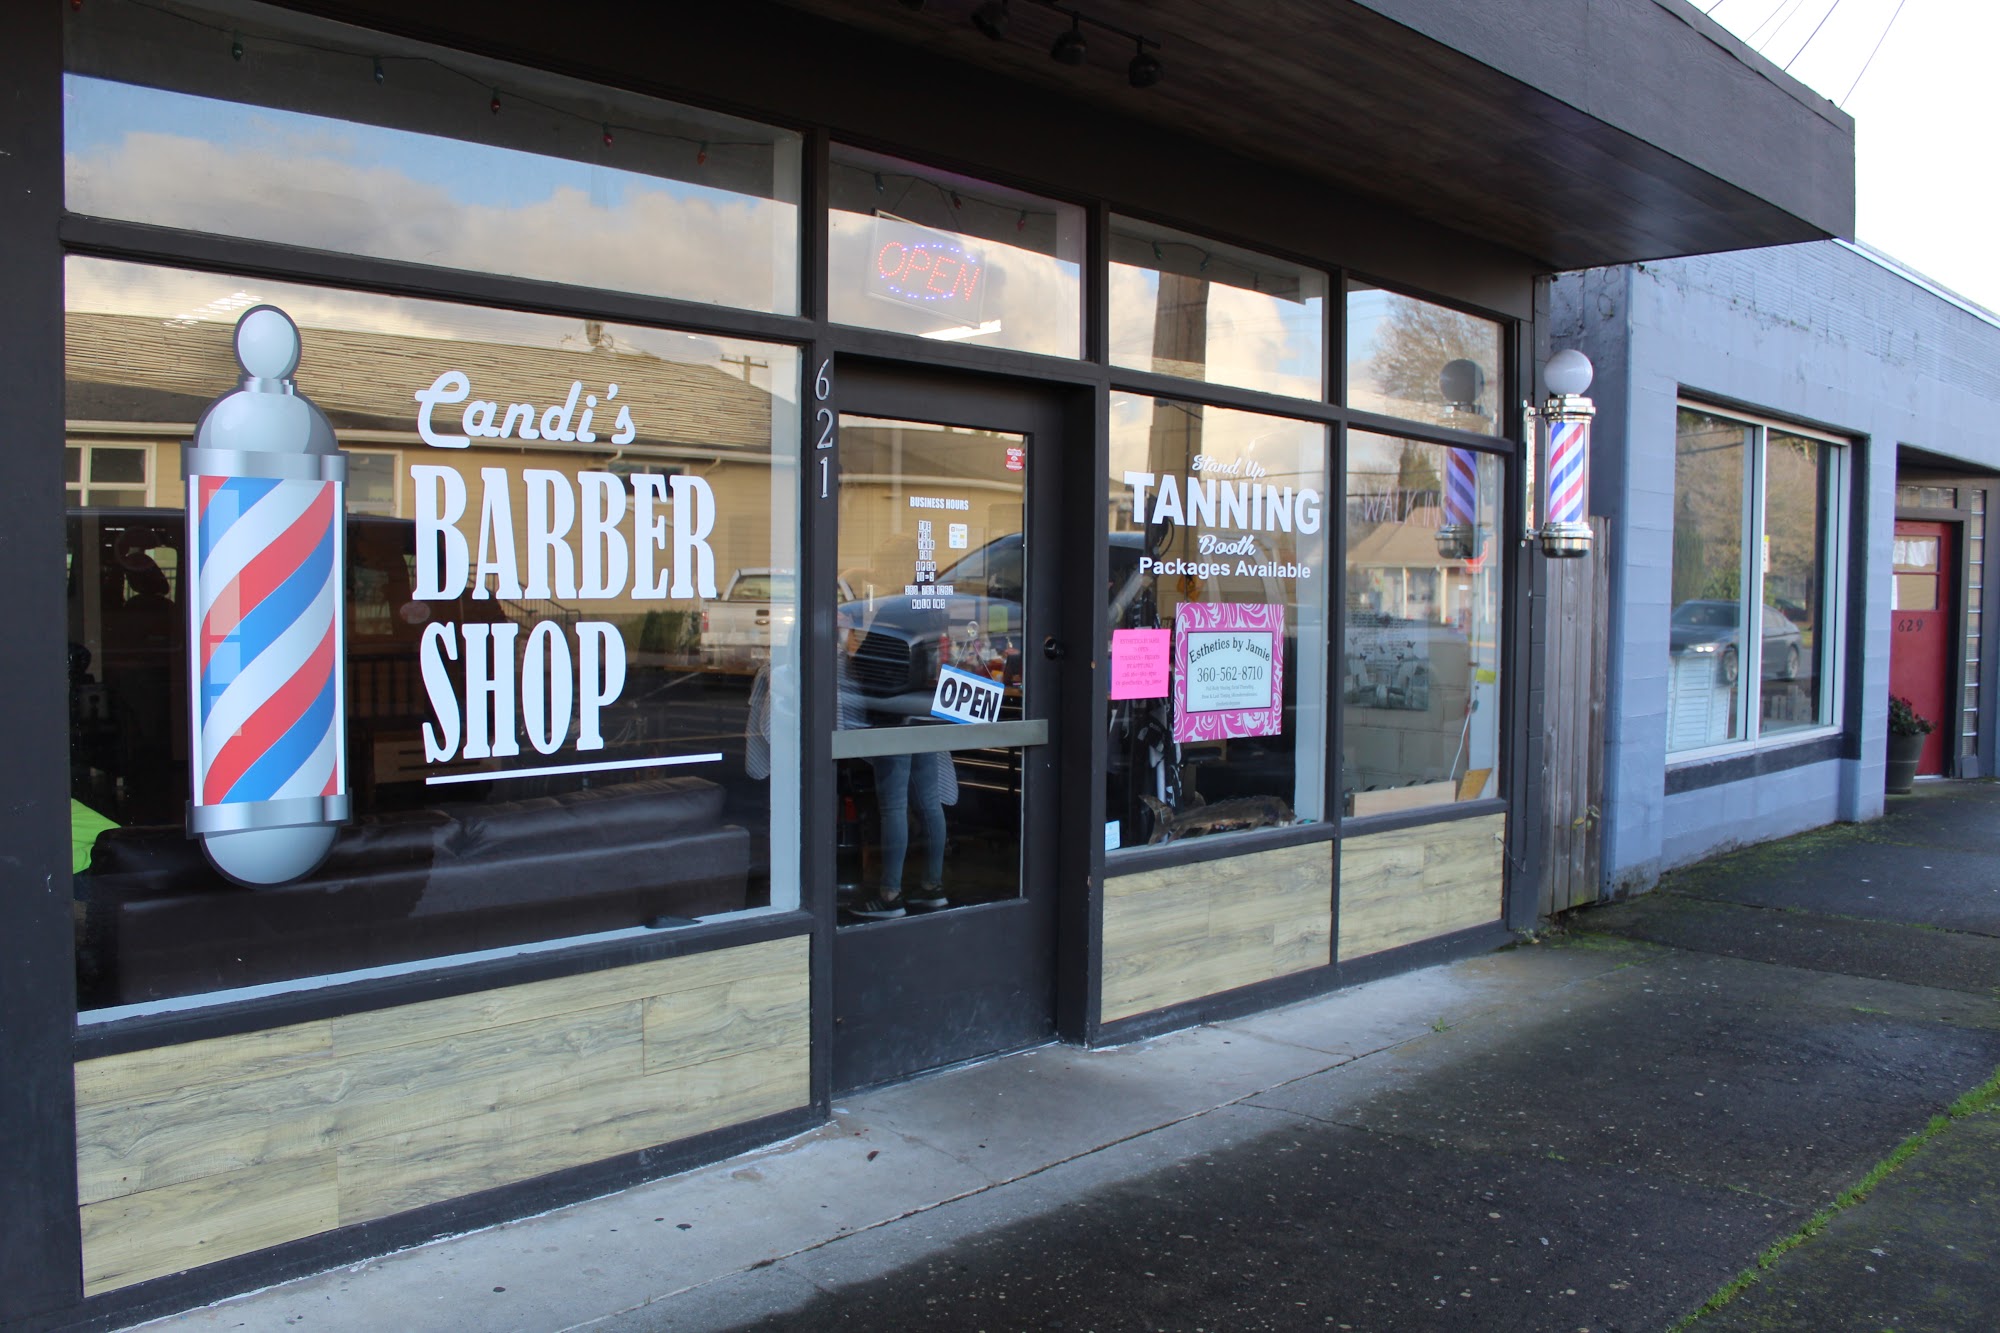 Candi's Barbershop